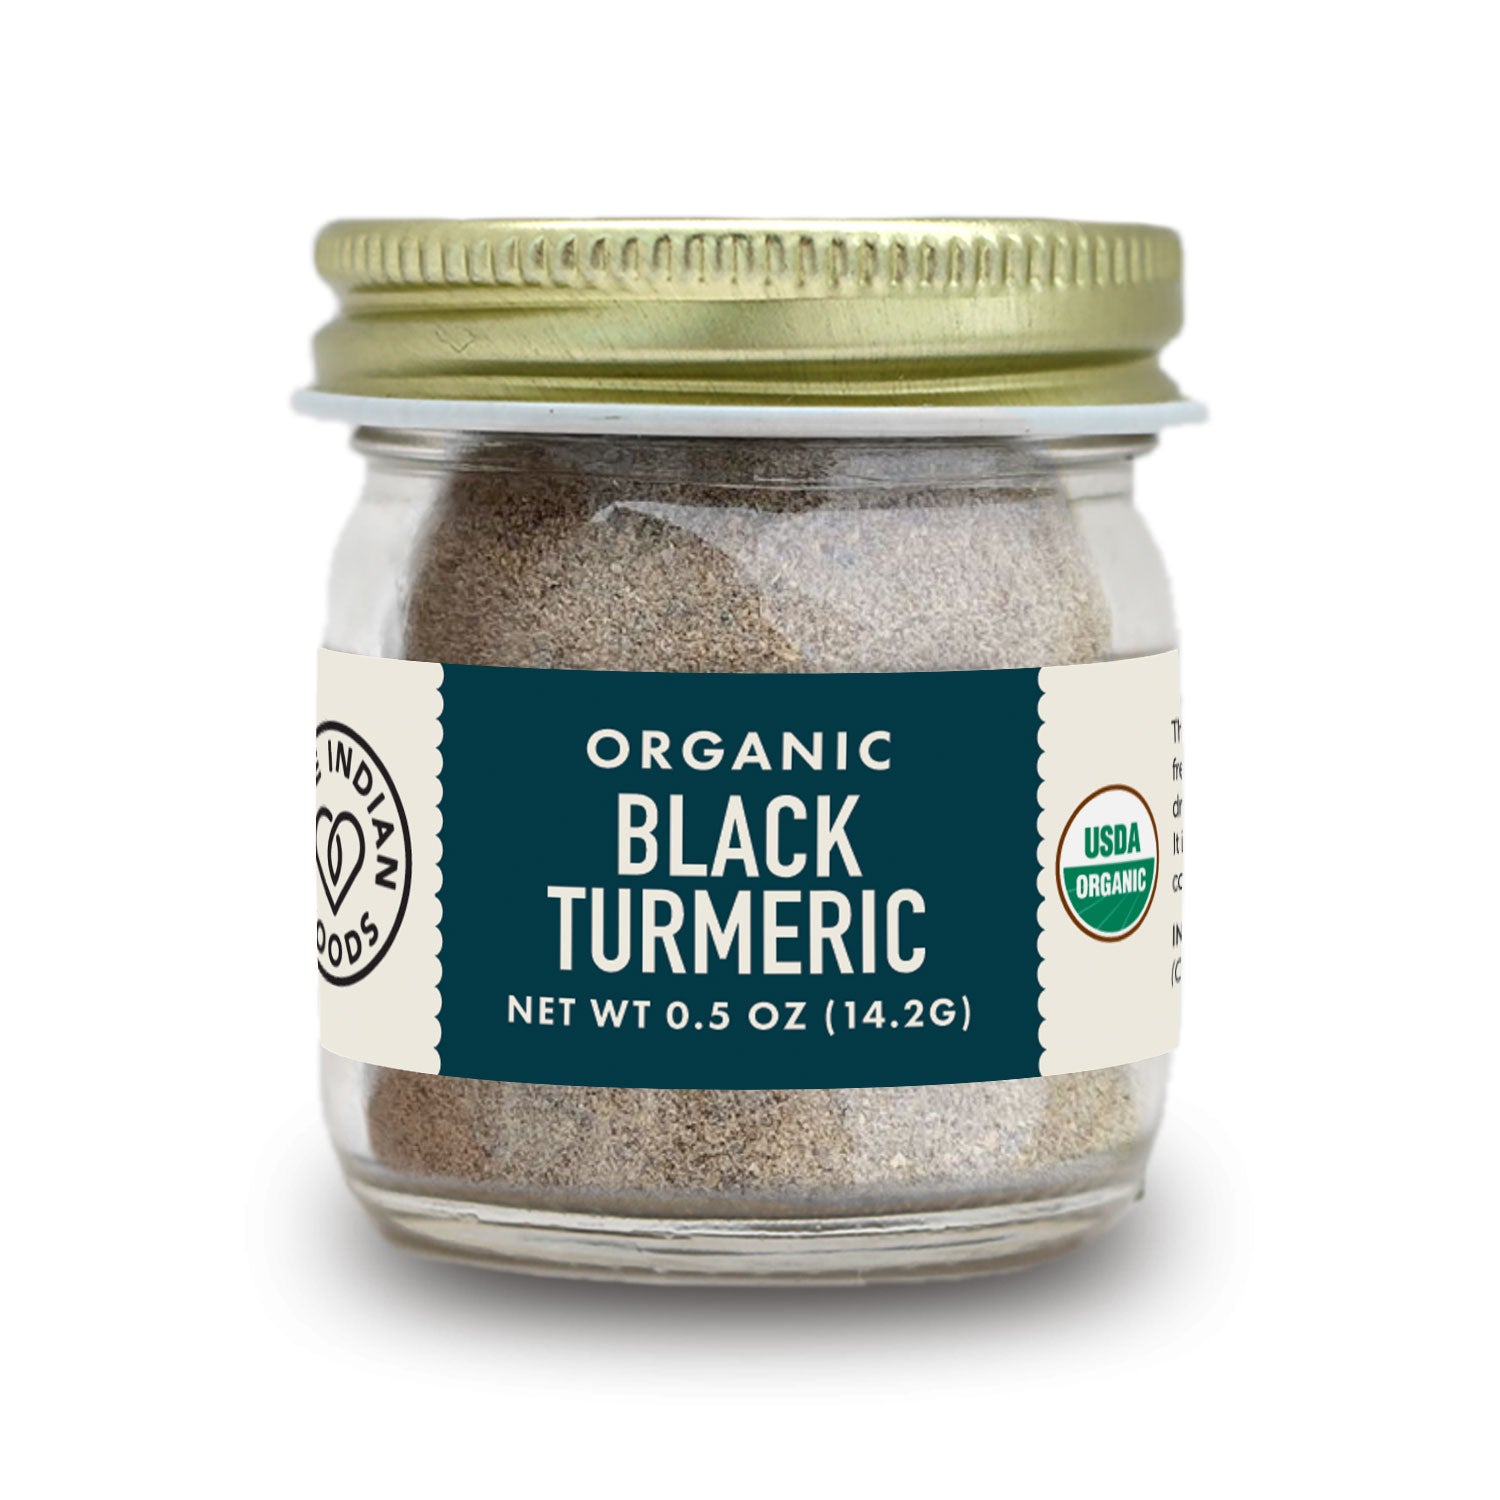 1 jar of Organic Black Turmeric from Pure Indian Foods